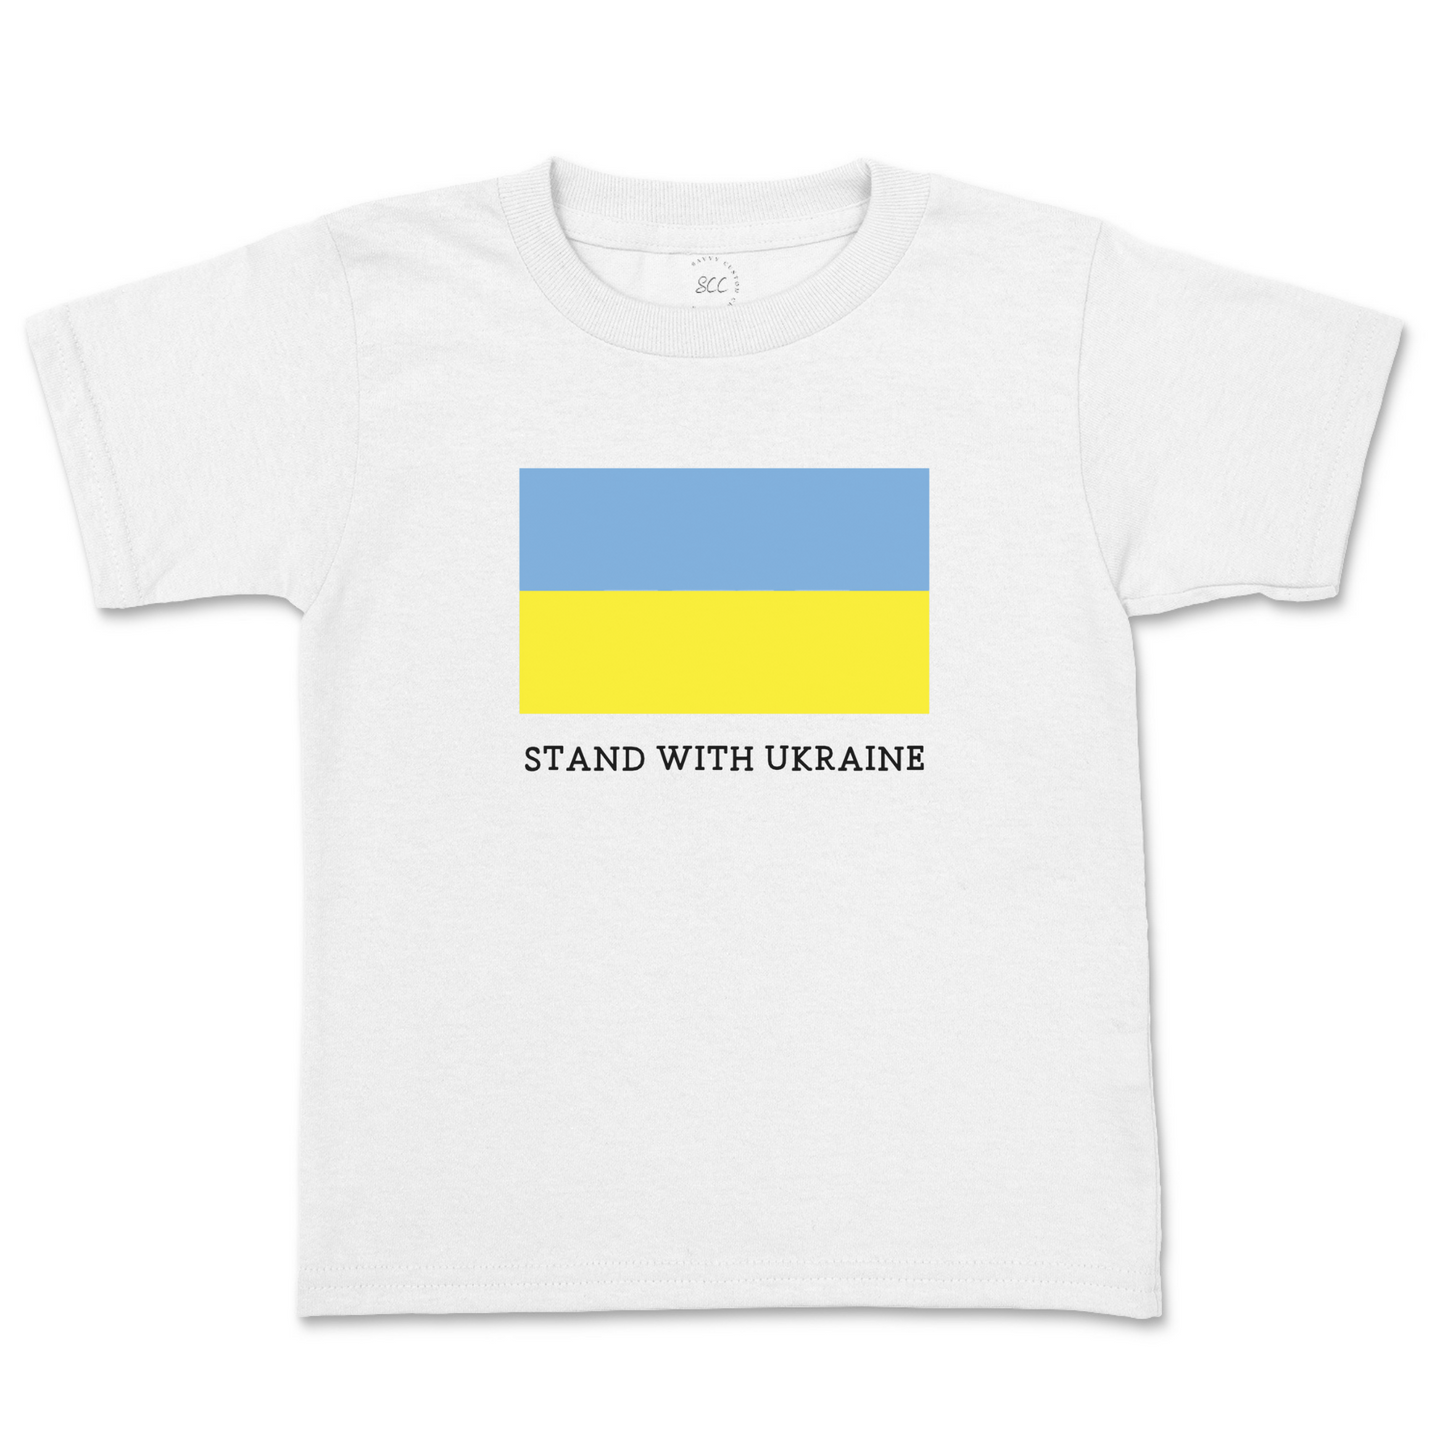 STAND WITH UKRAINE - Kids T-Shirt